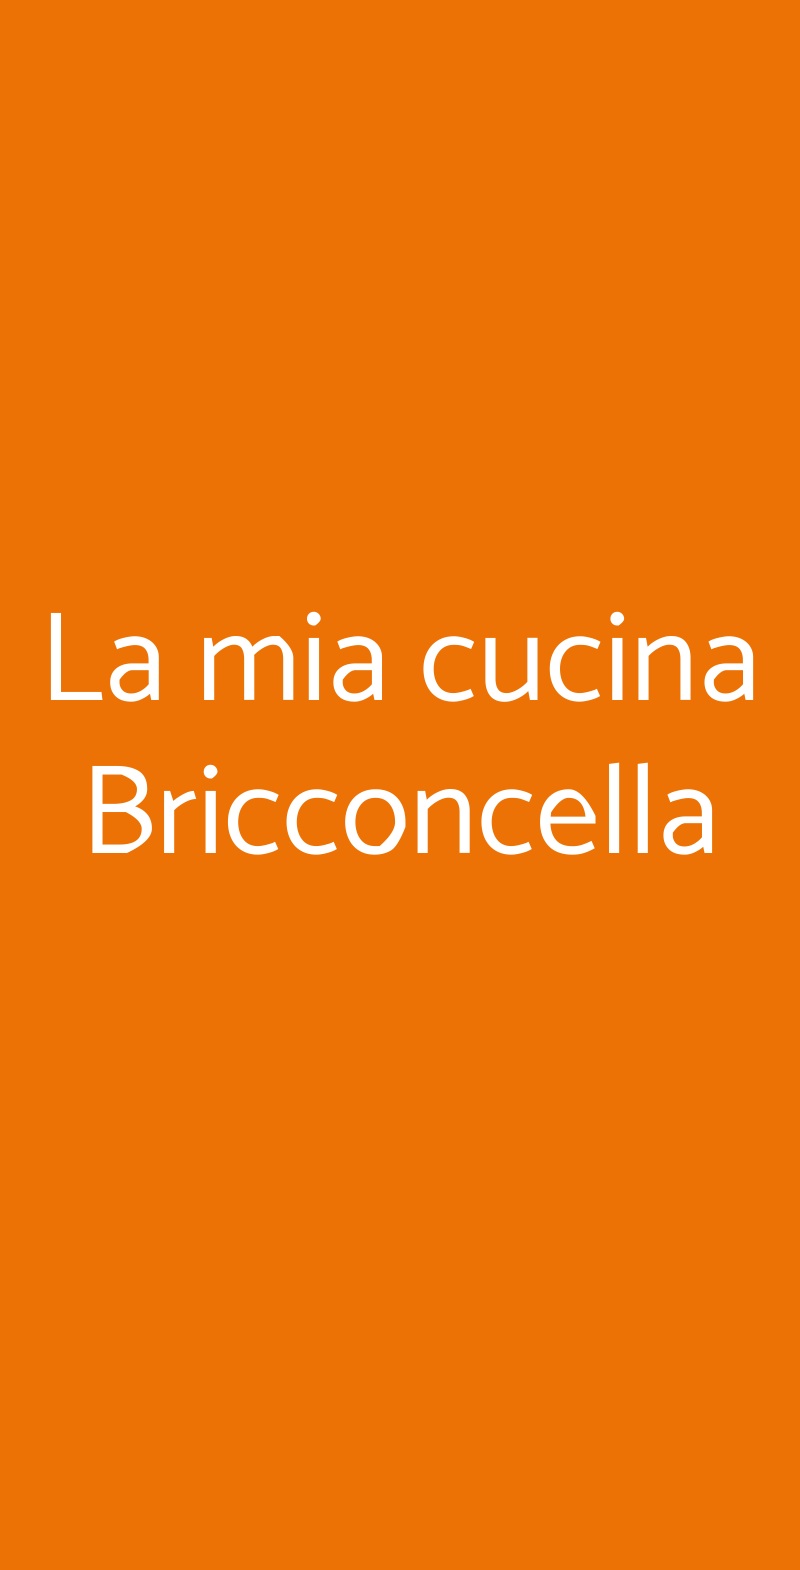 La mia cucina Bricconcella Faenza menù 1 pagina